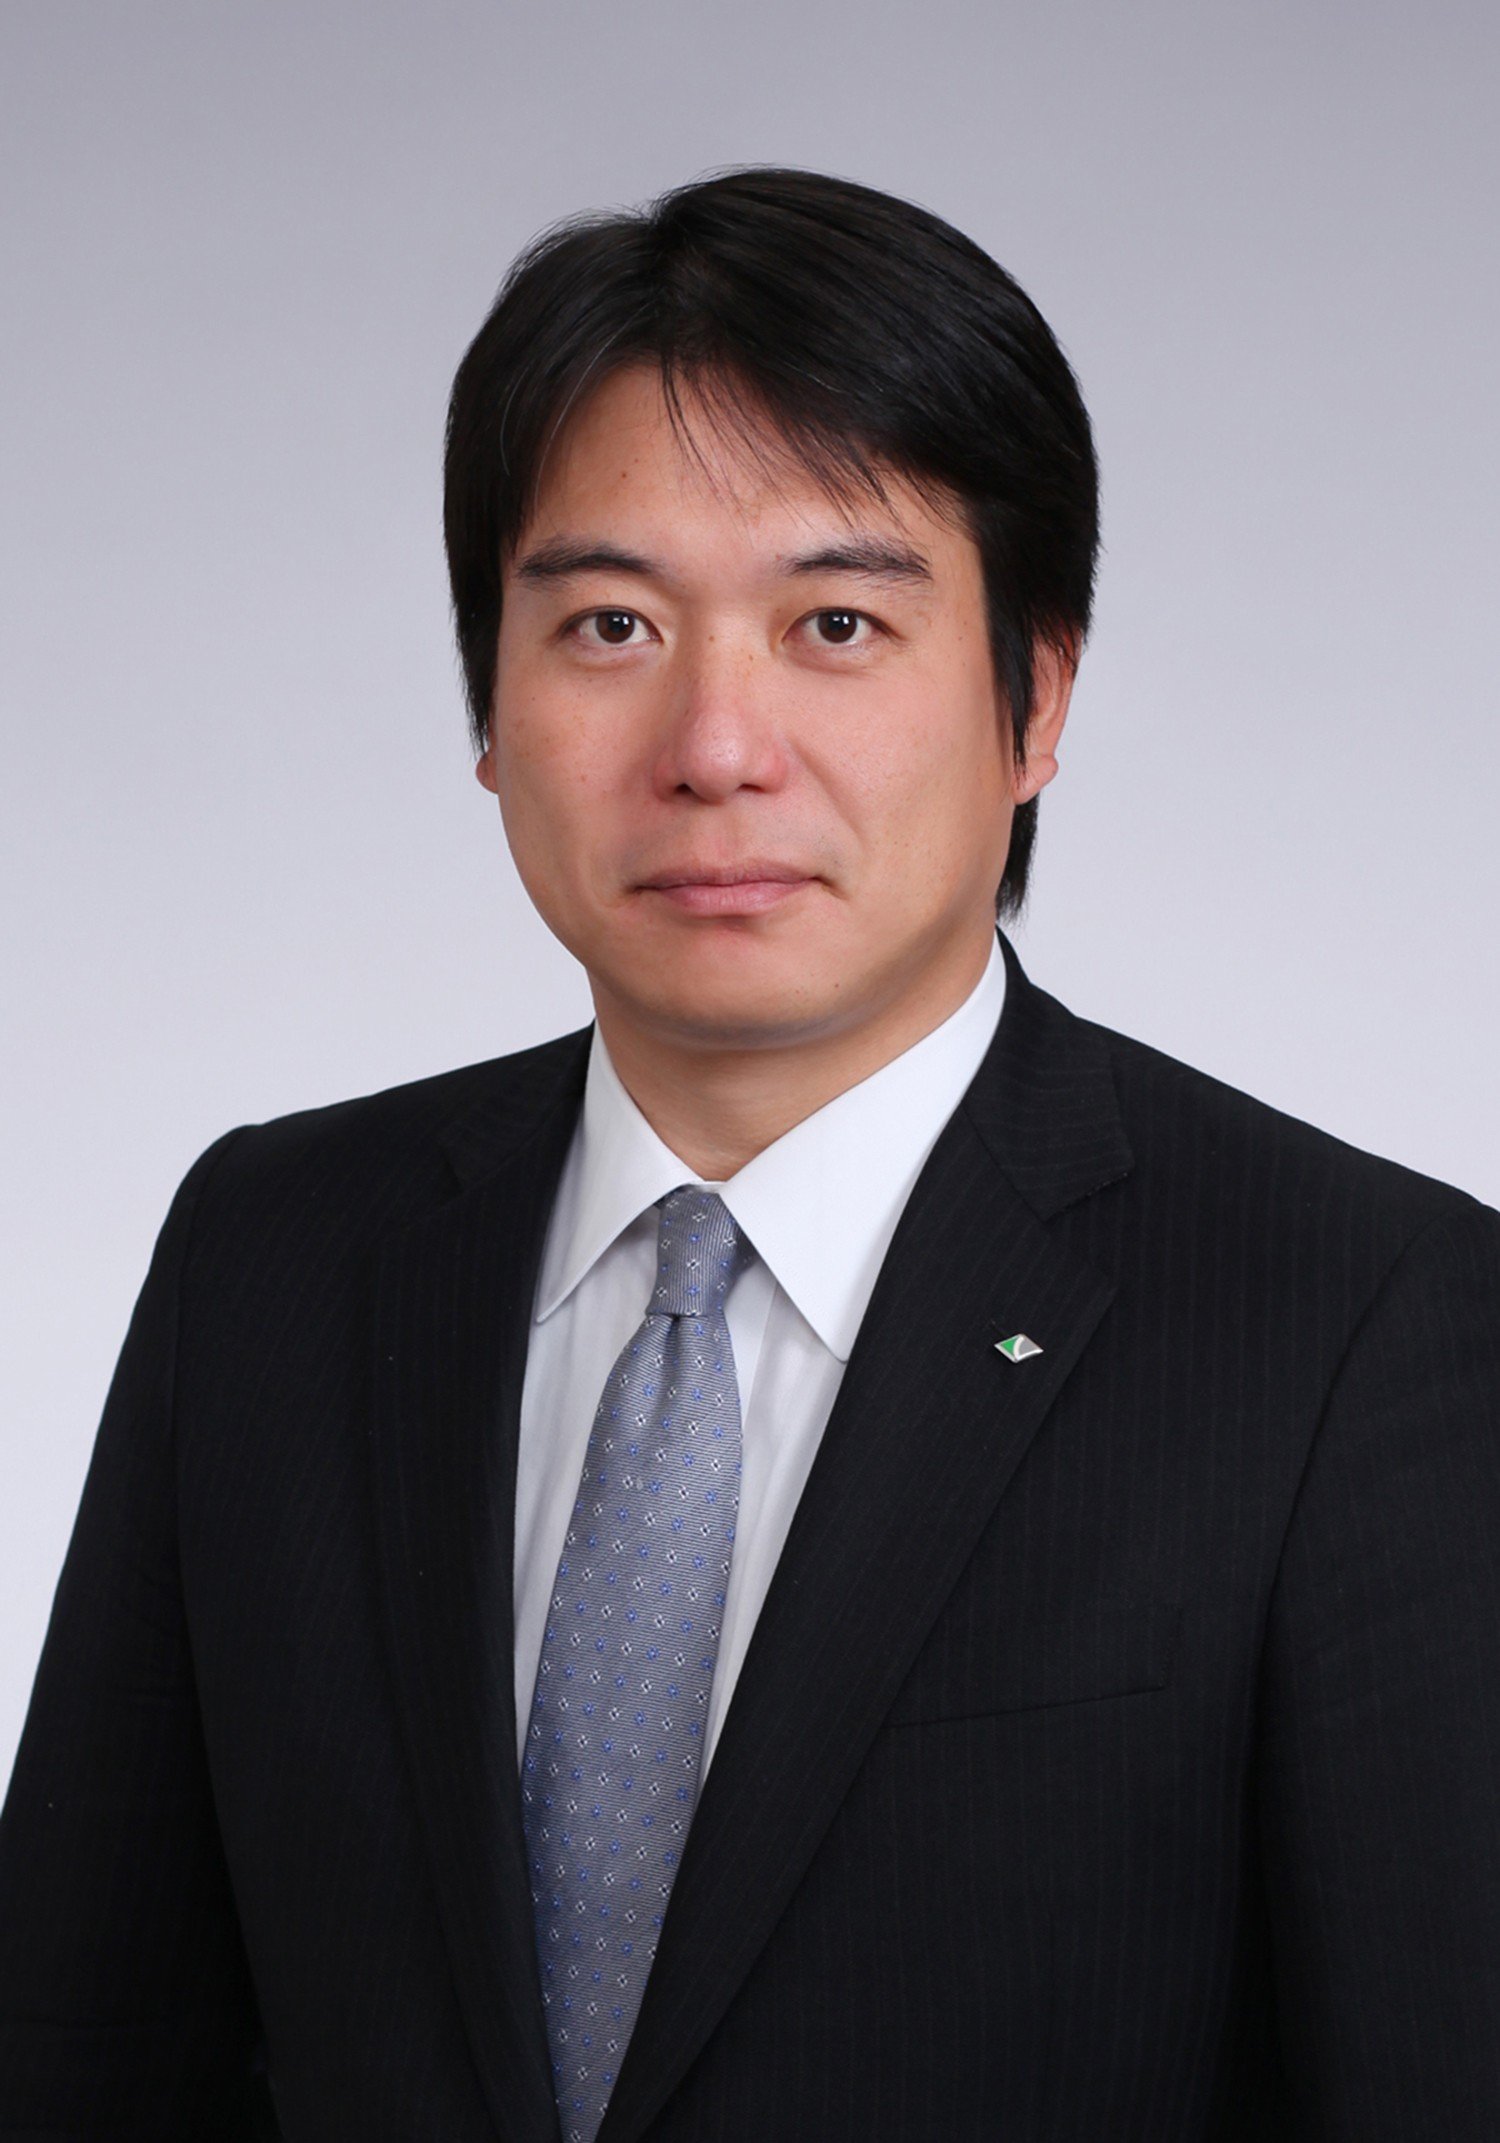 Hirota Tanahashi, president